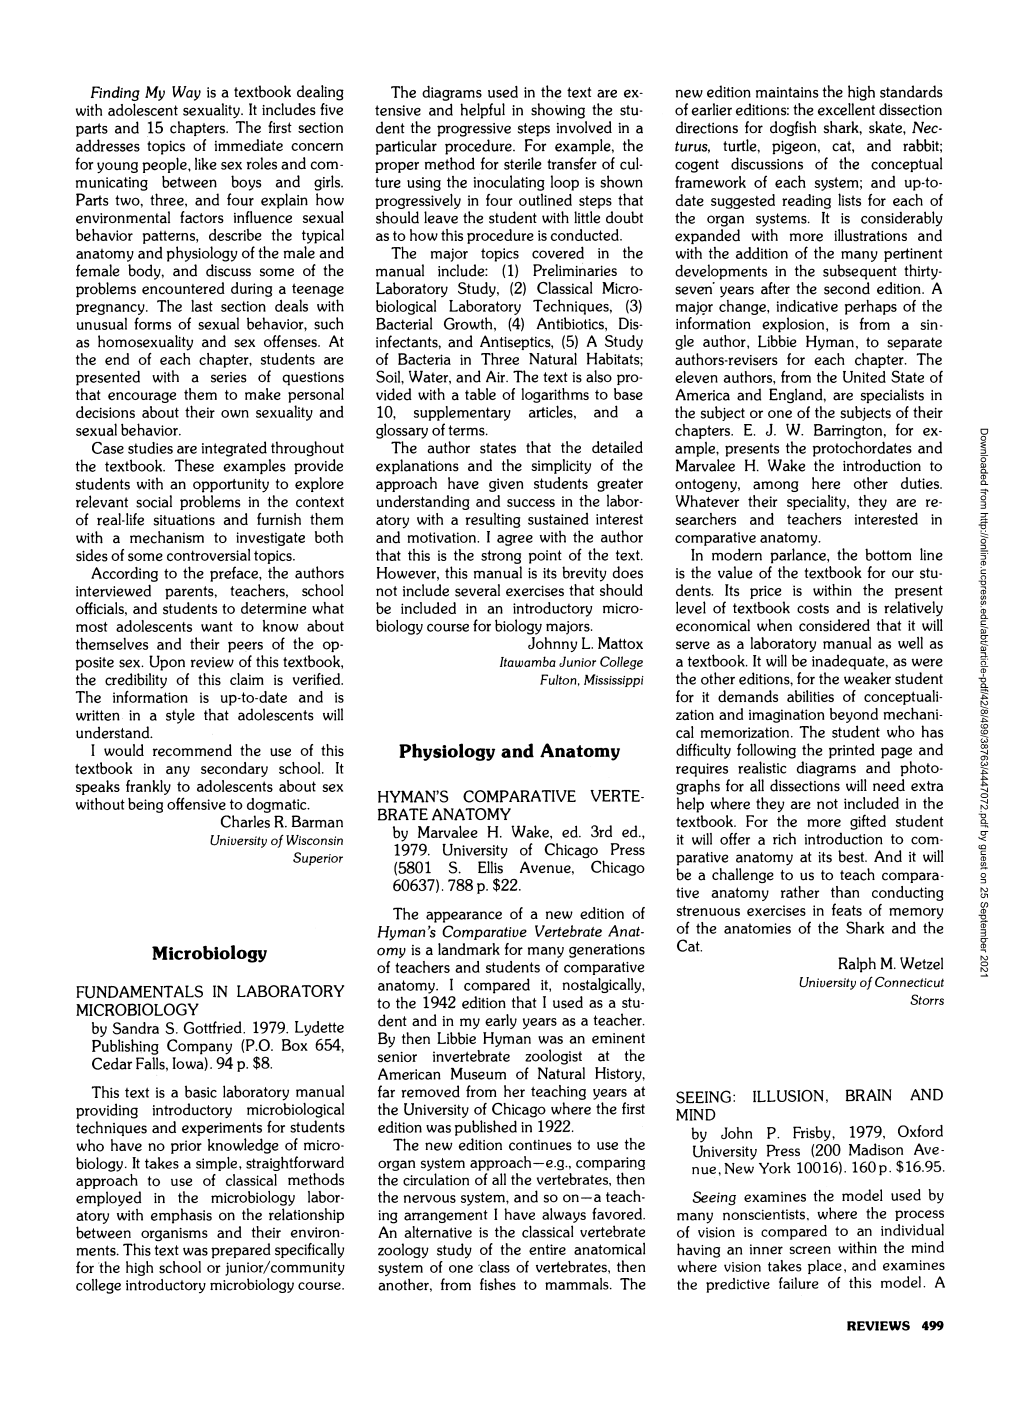 &lt;Article-Title&gt;Hyman's Comparative Vertebrate Anatomy&lt;/Article-Title